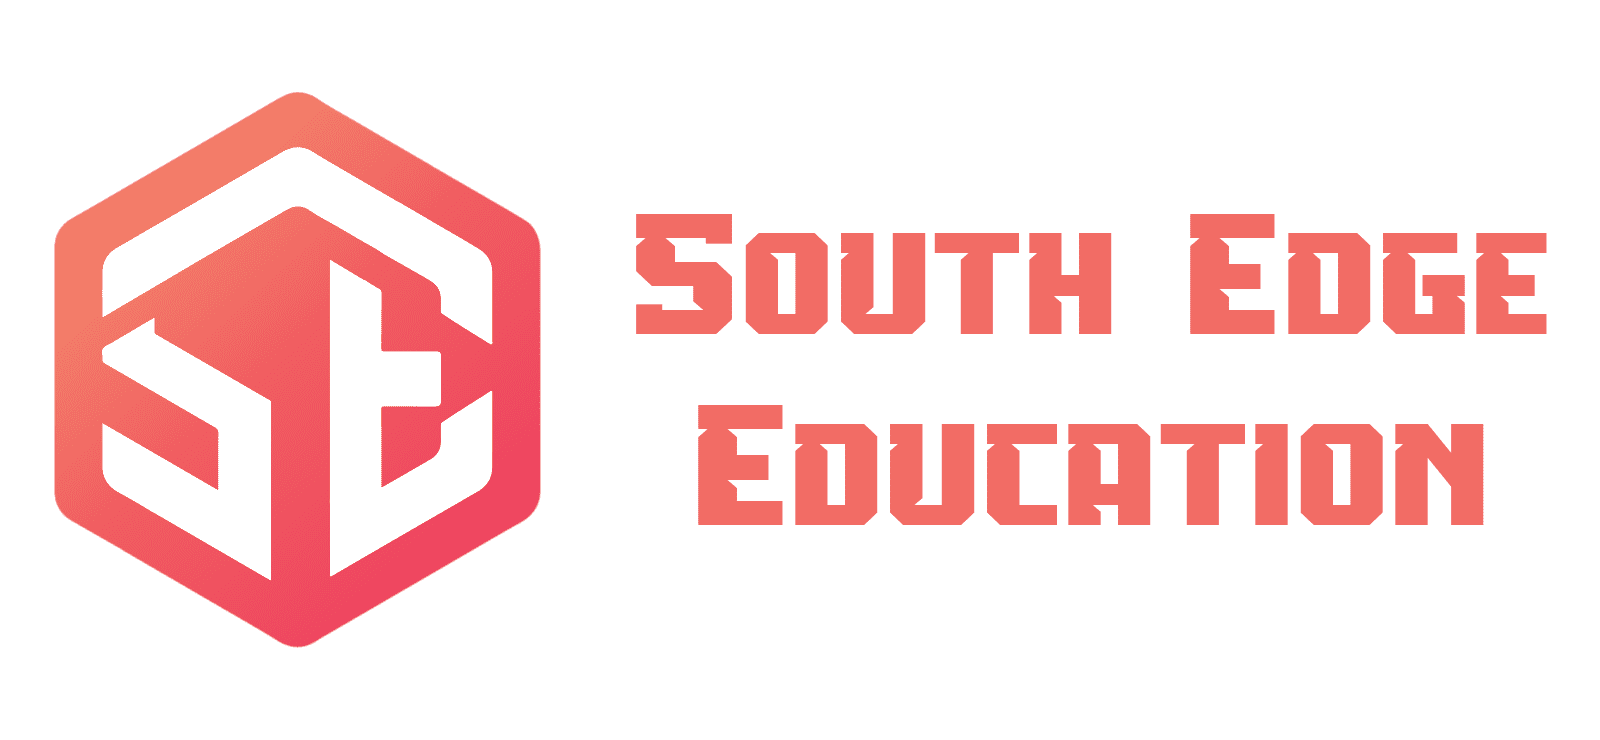 South Edge Education